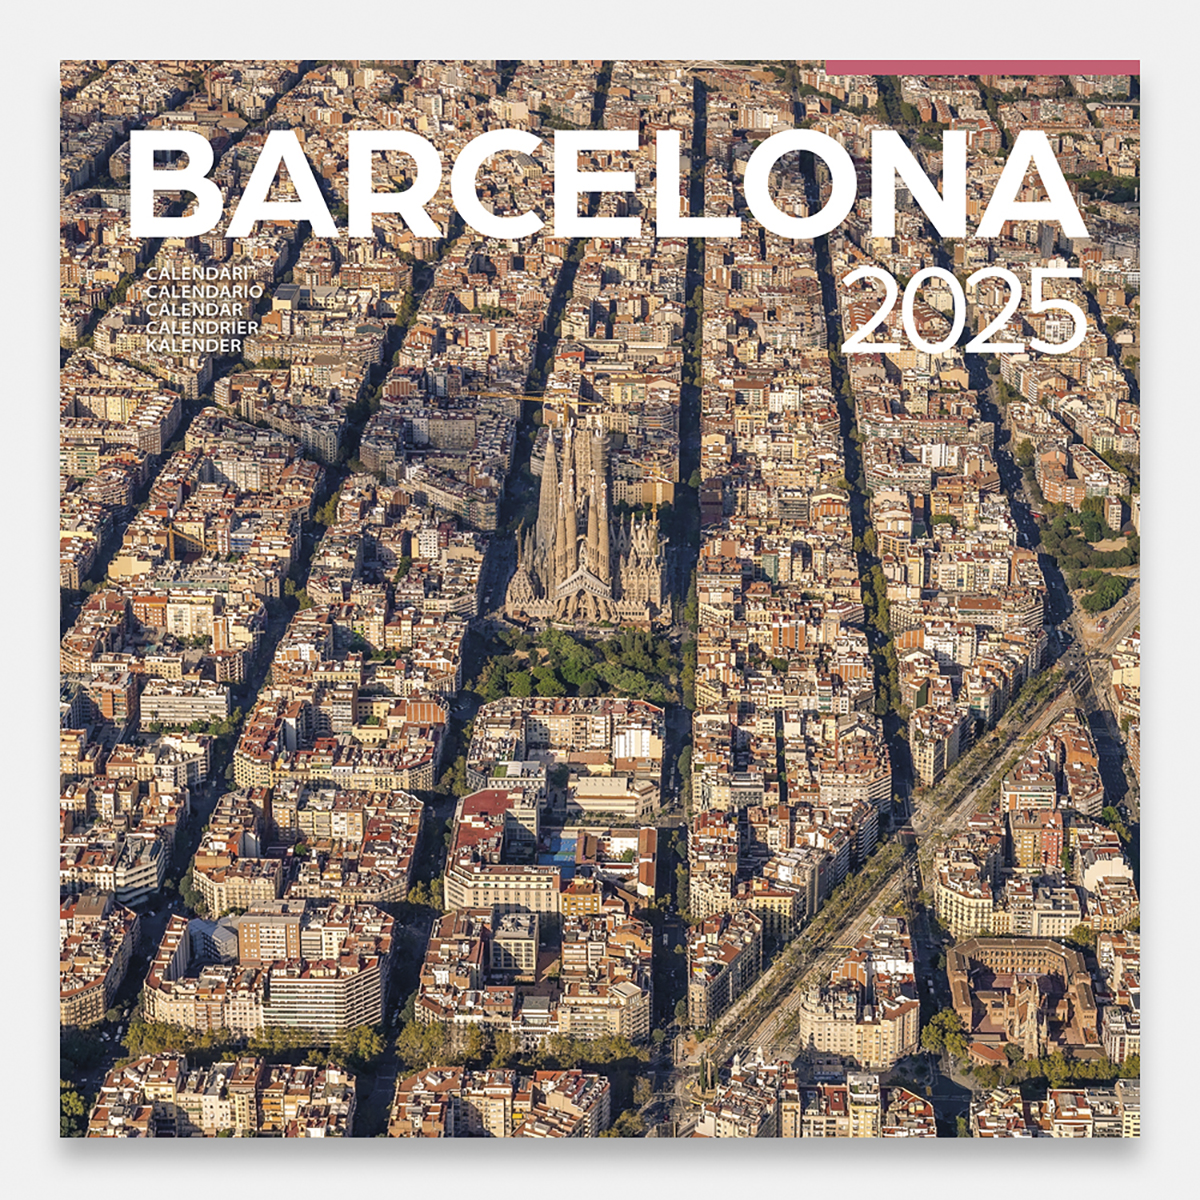 Calendar 2025 Barcelona 25bg2 calendario pared 2025 barcelona